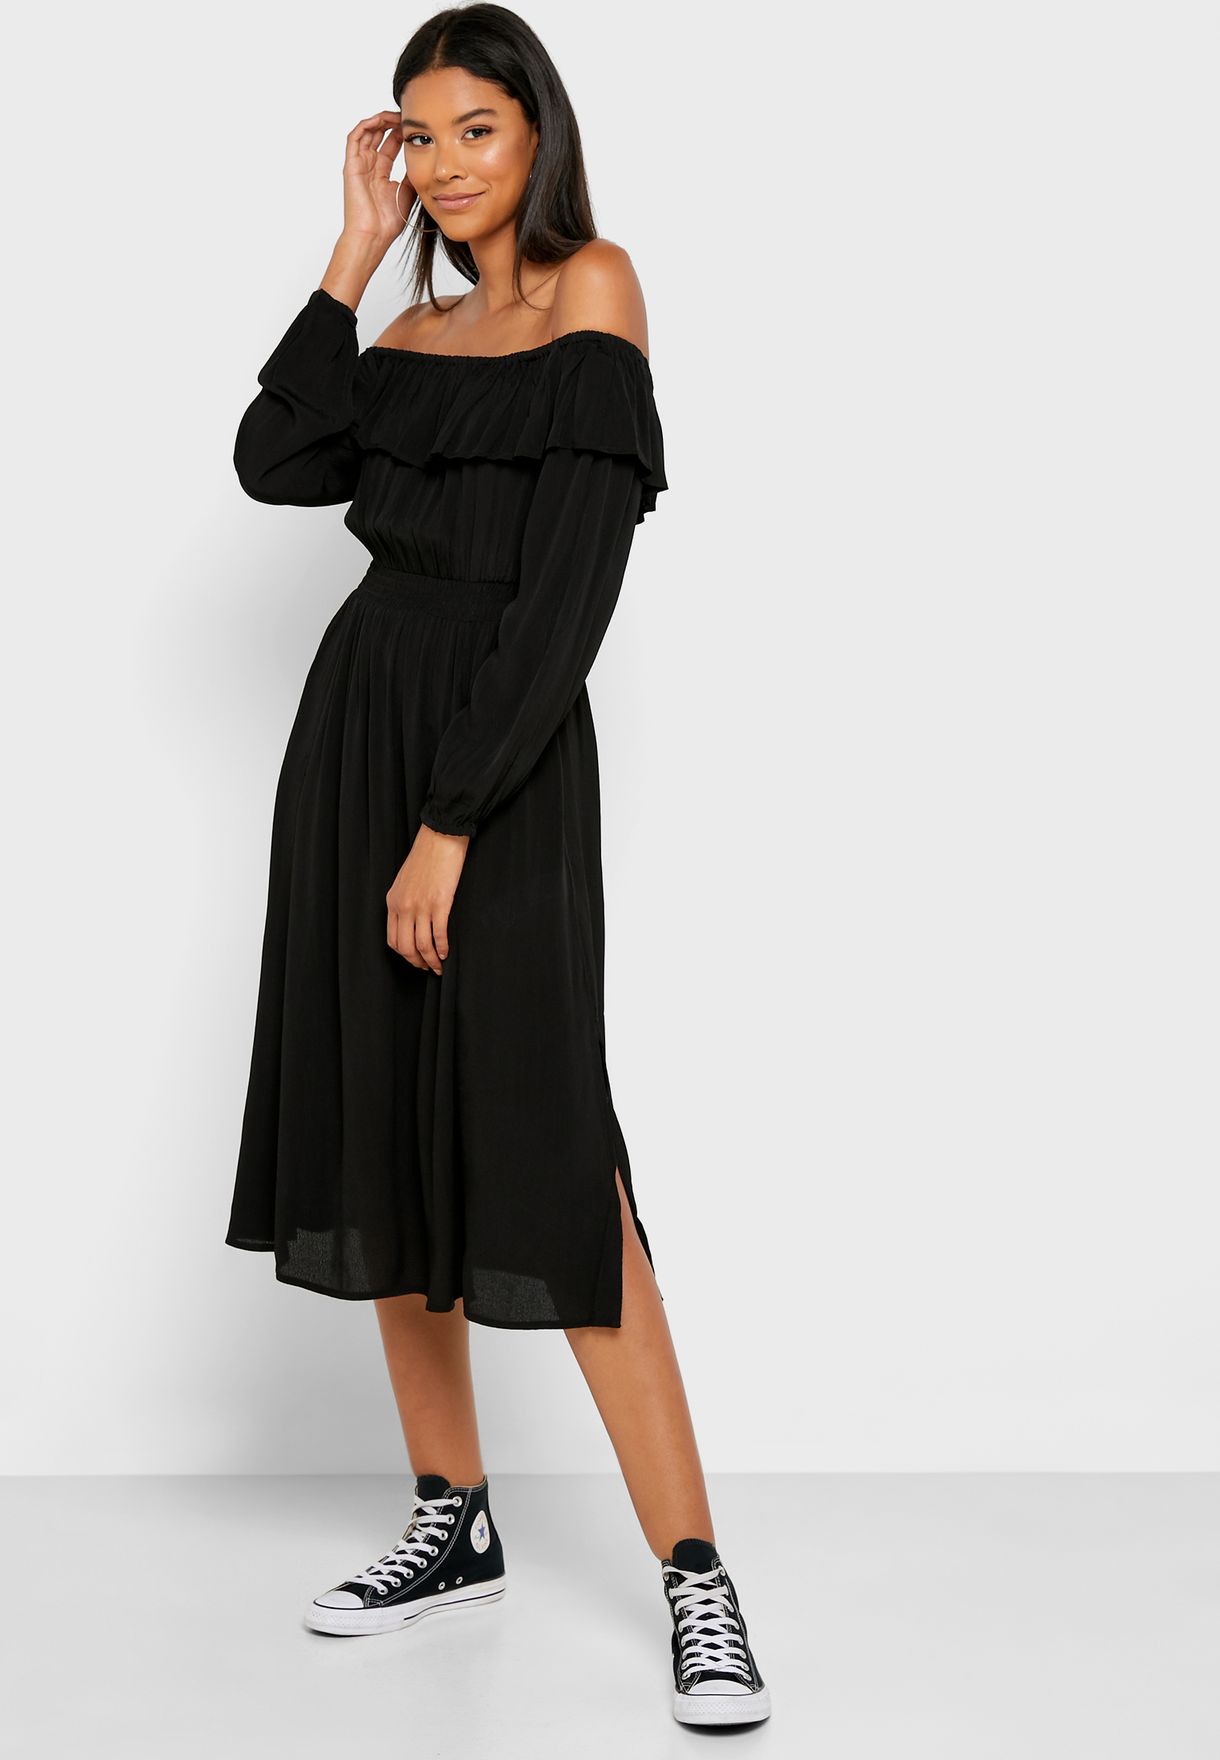 black cotton dress casual